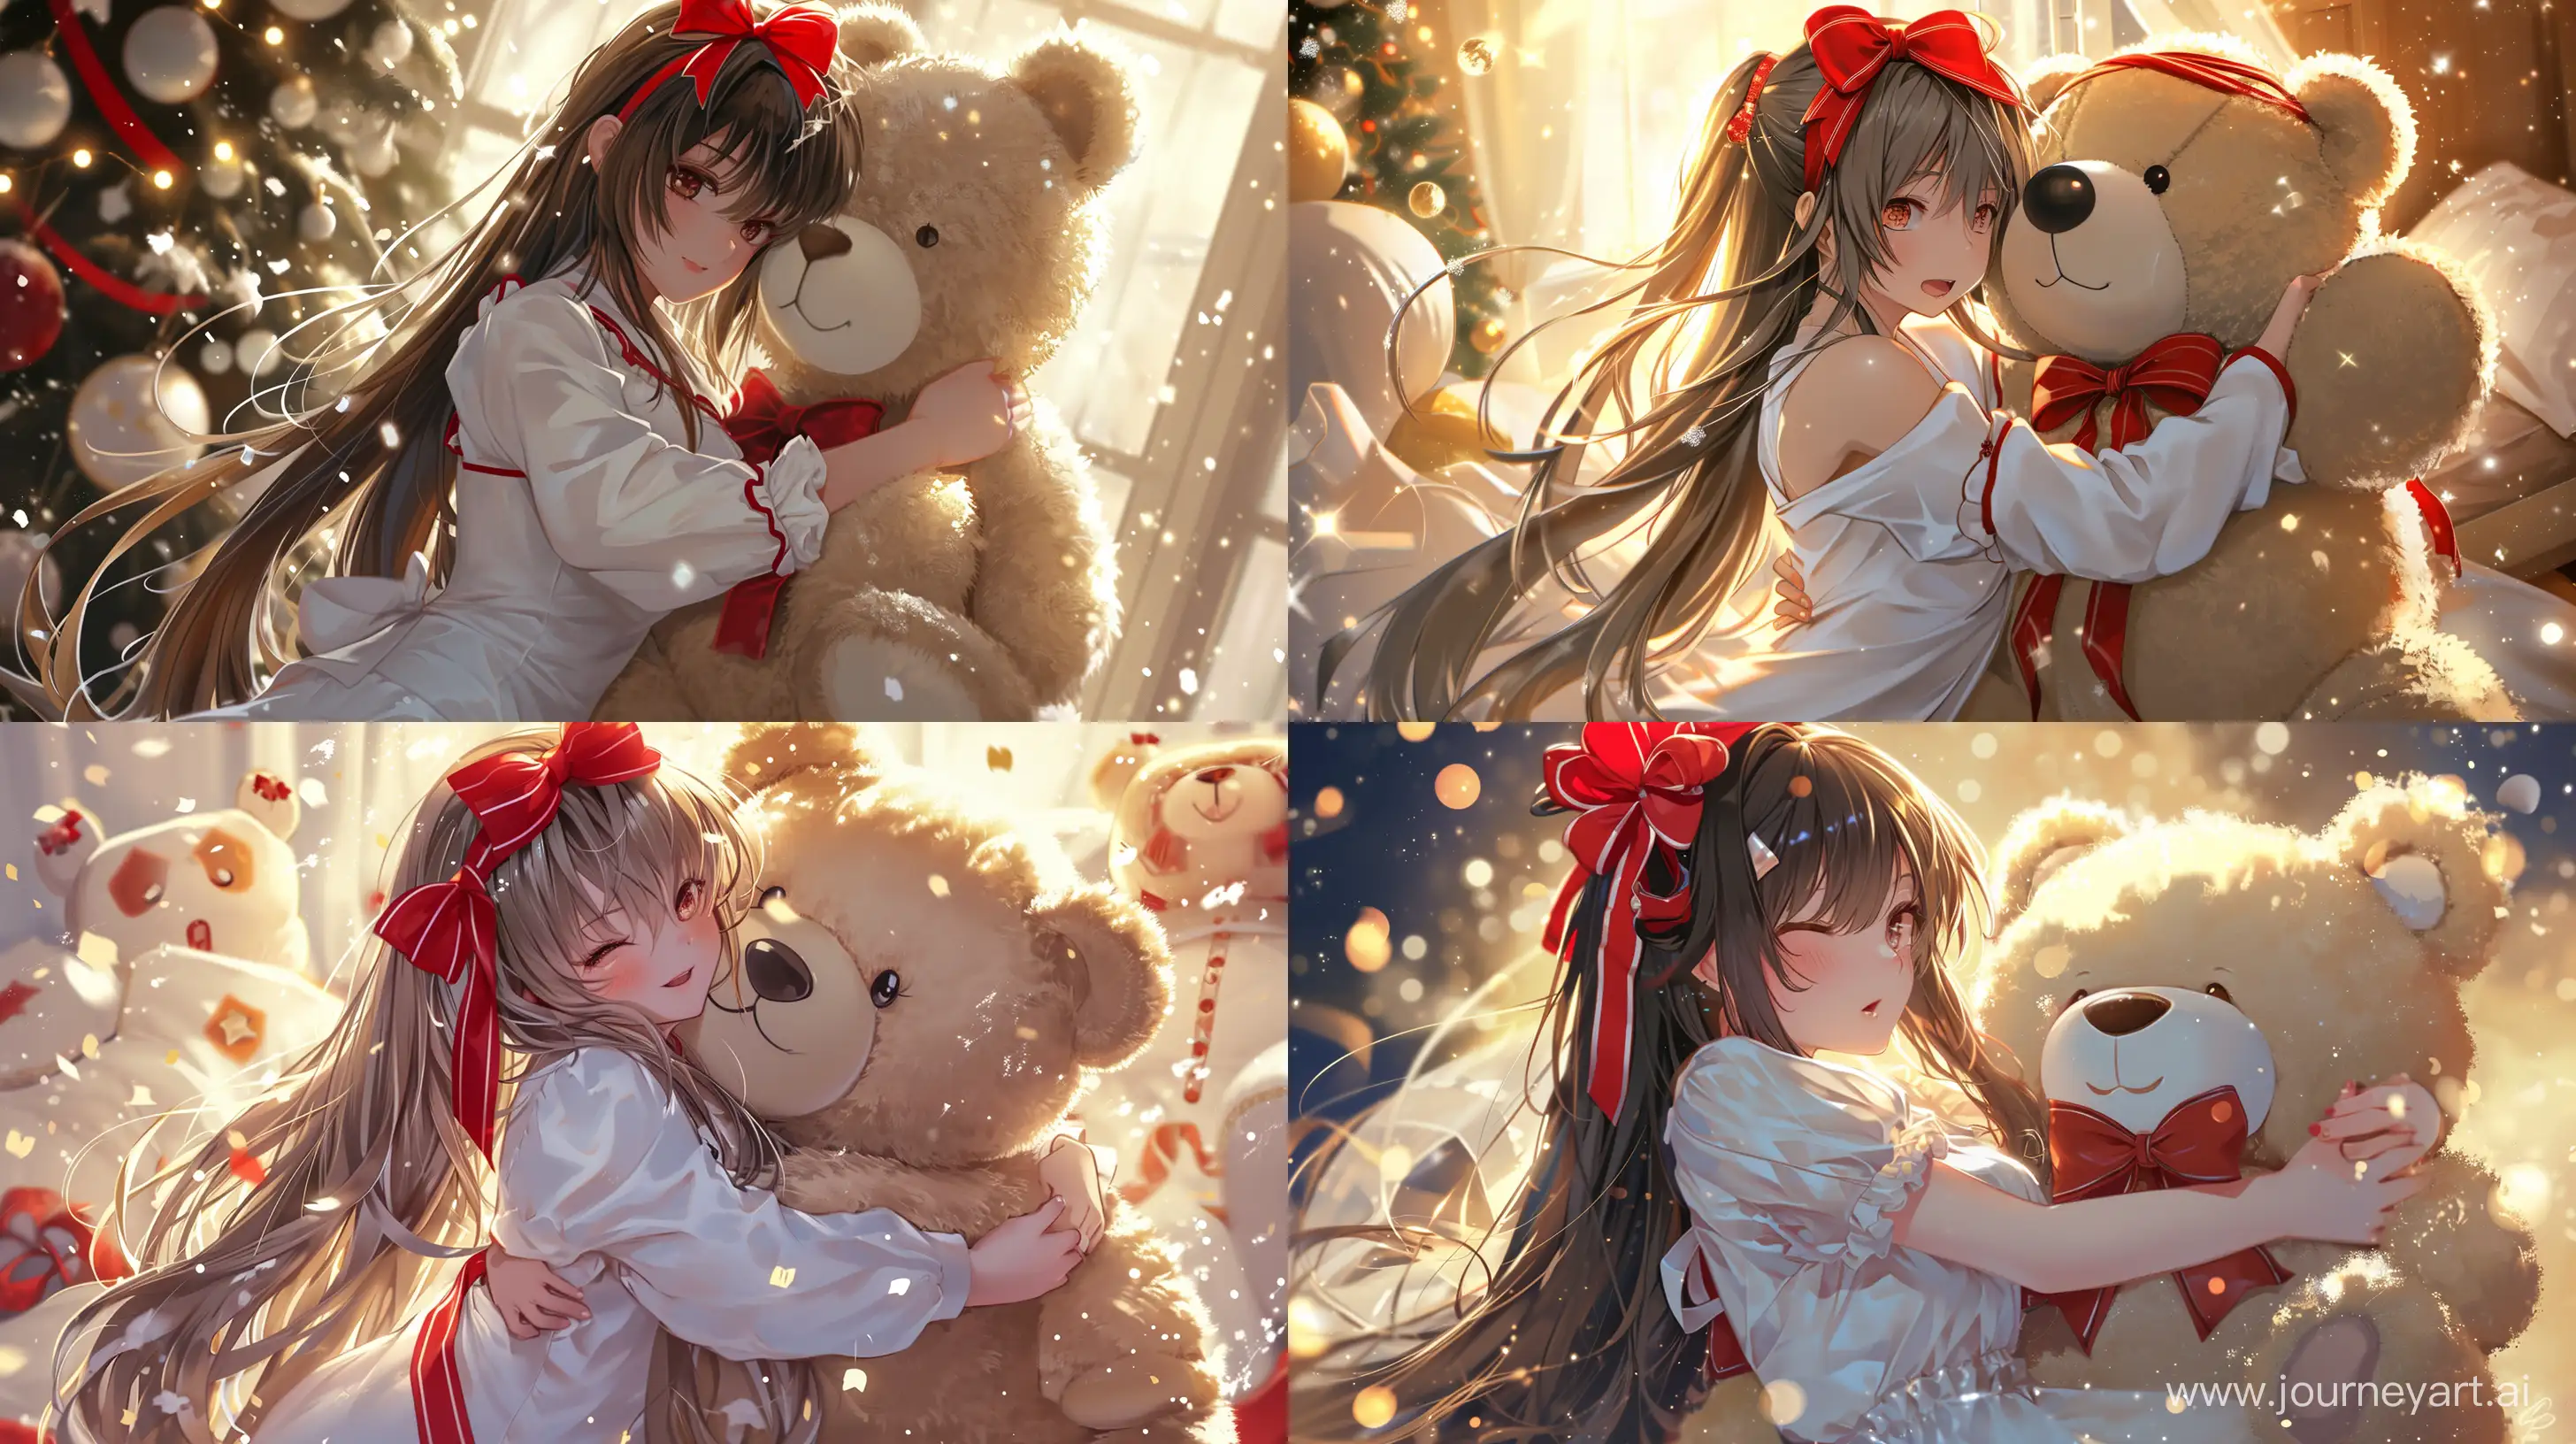 Enchanting-Anime-Girl-Embracing-Giant-Teddy-Bear-in-Elegant-Nightgown